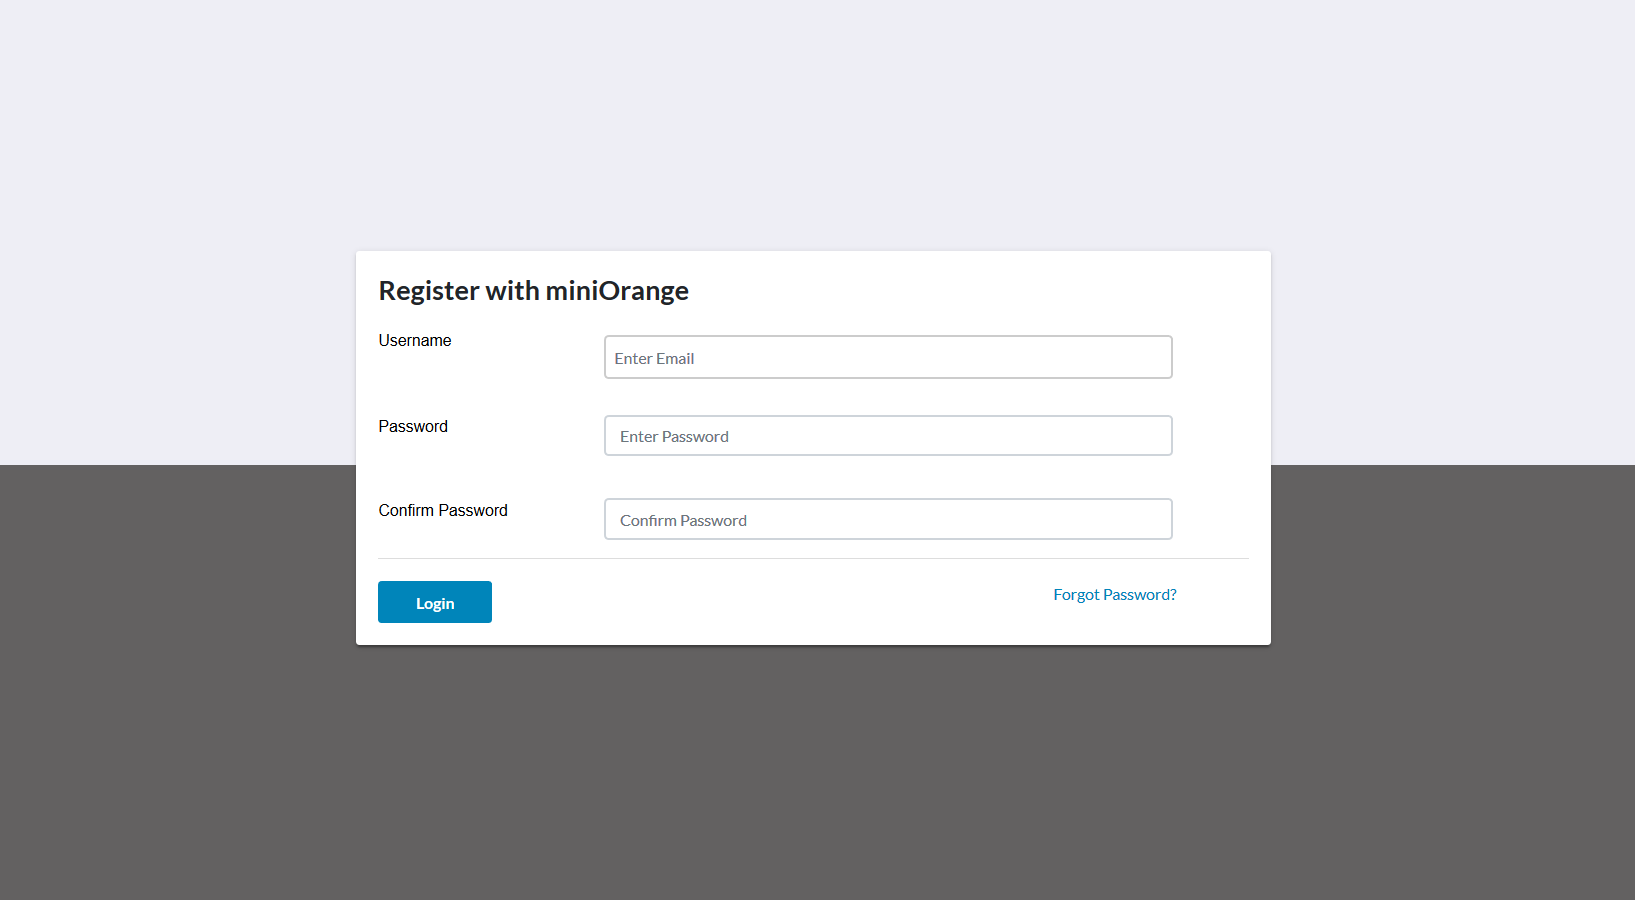 ASP.NET AWS Cognito OAuth SSO - register with miniorange